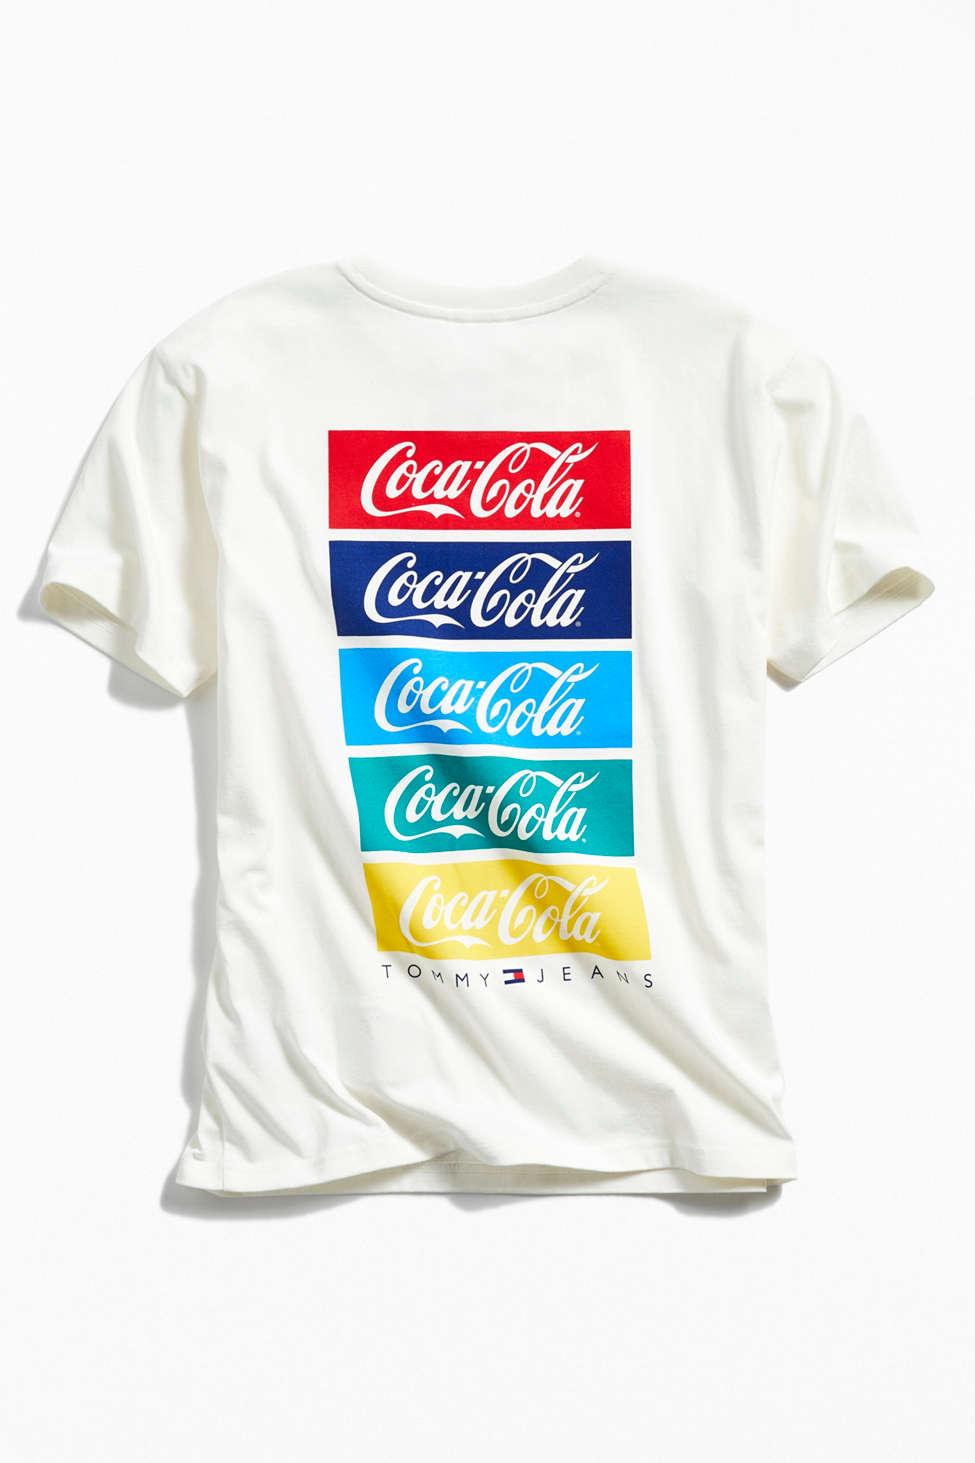 tommy hilfiger coca cola clothing